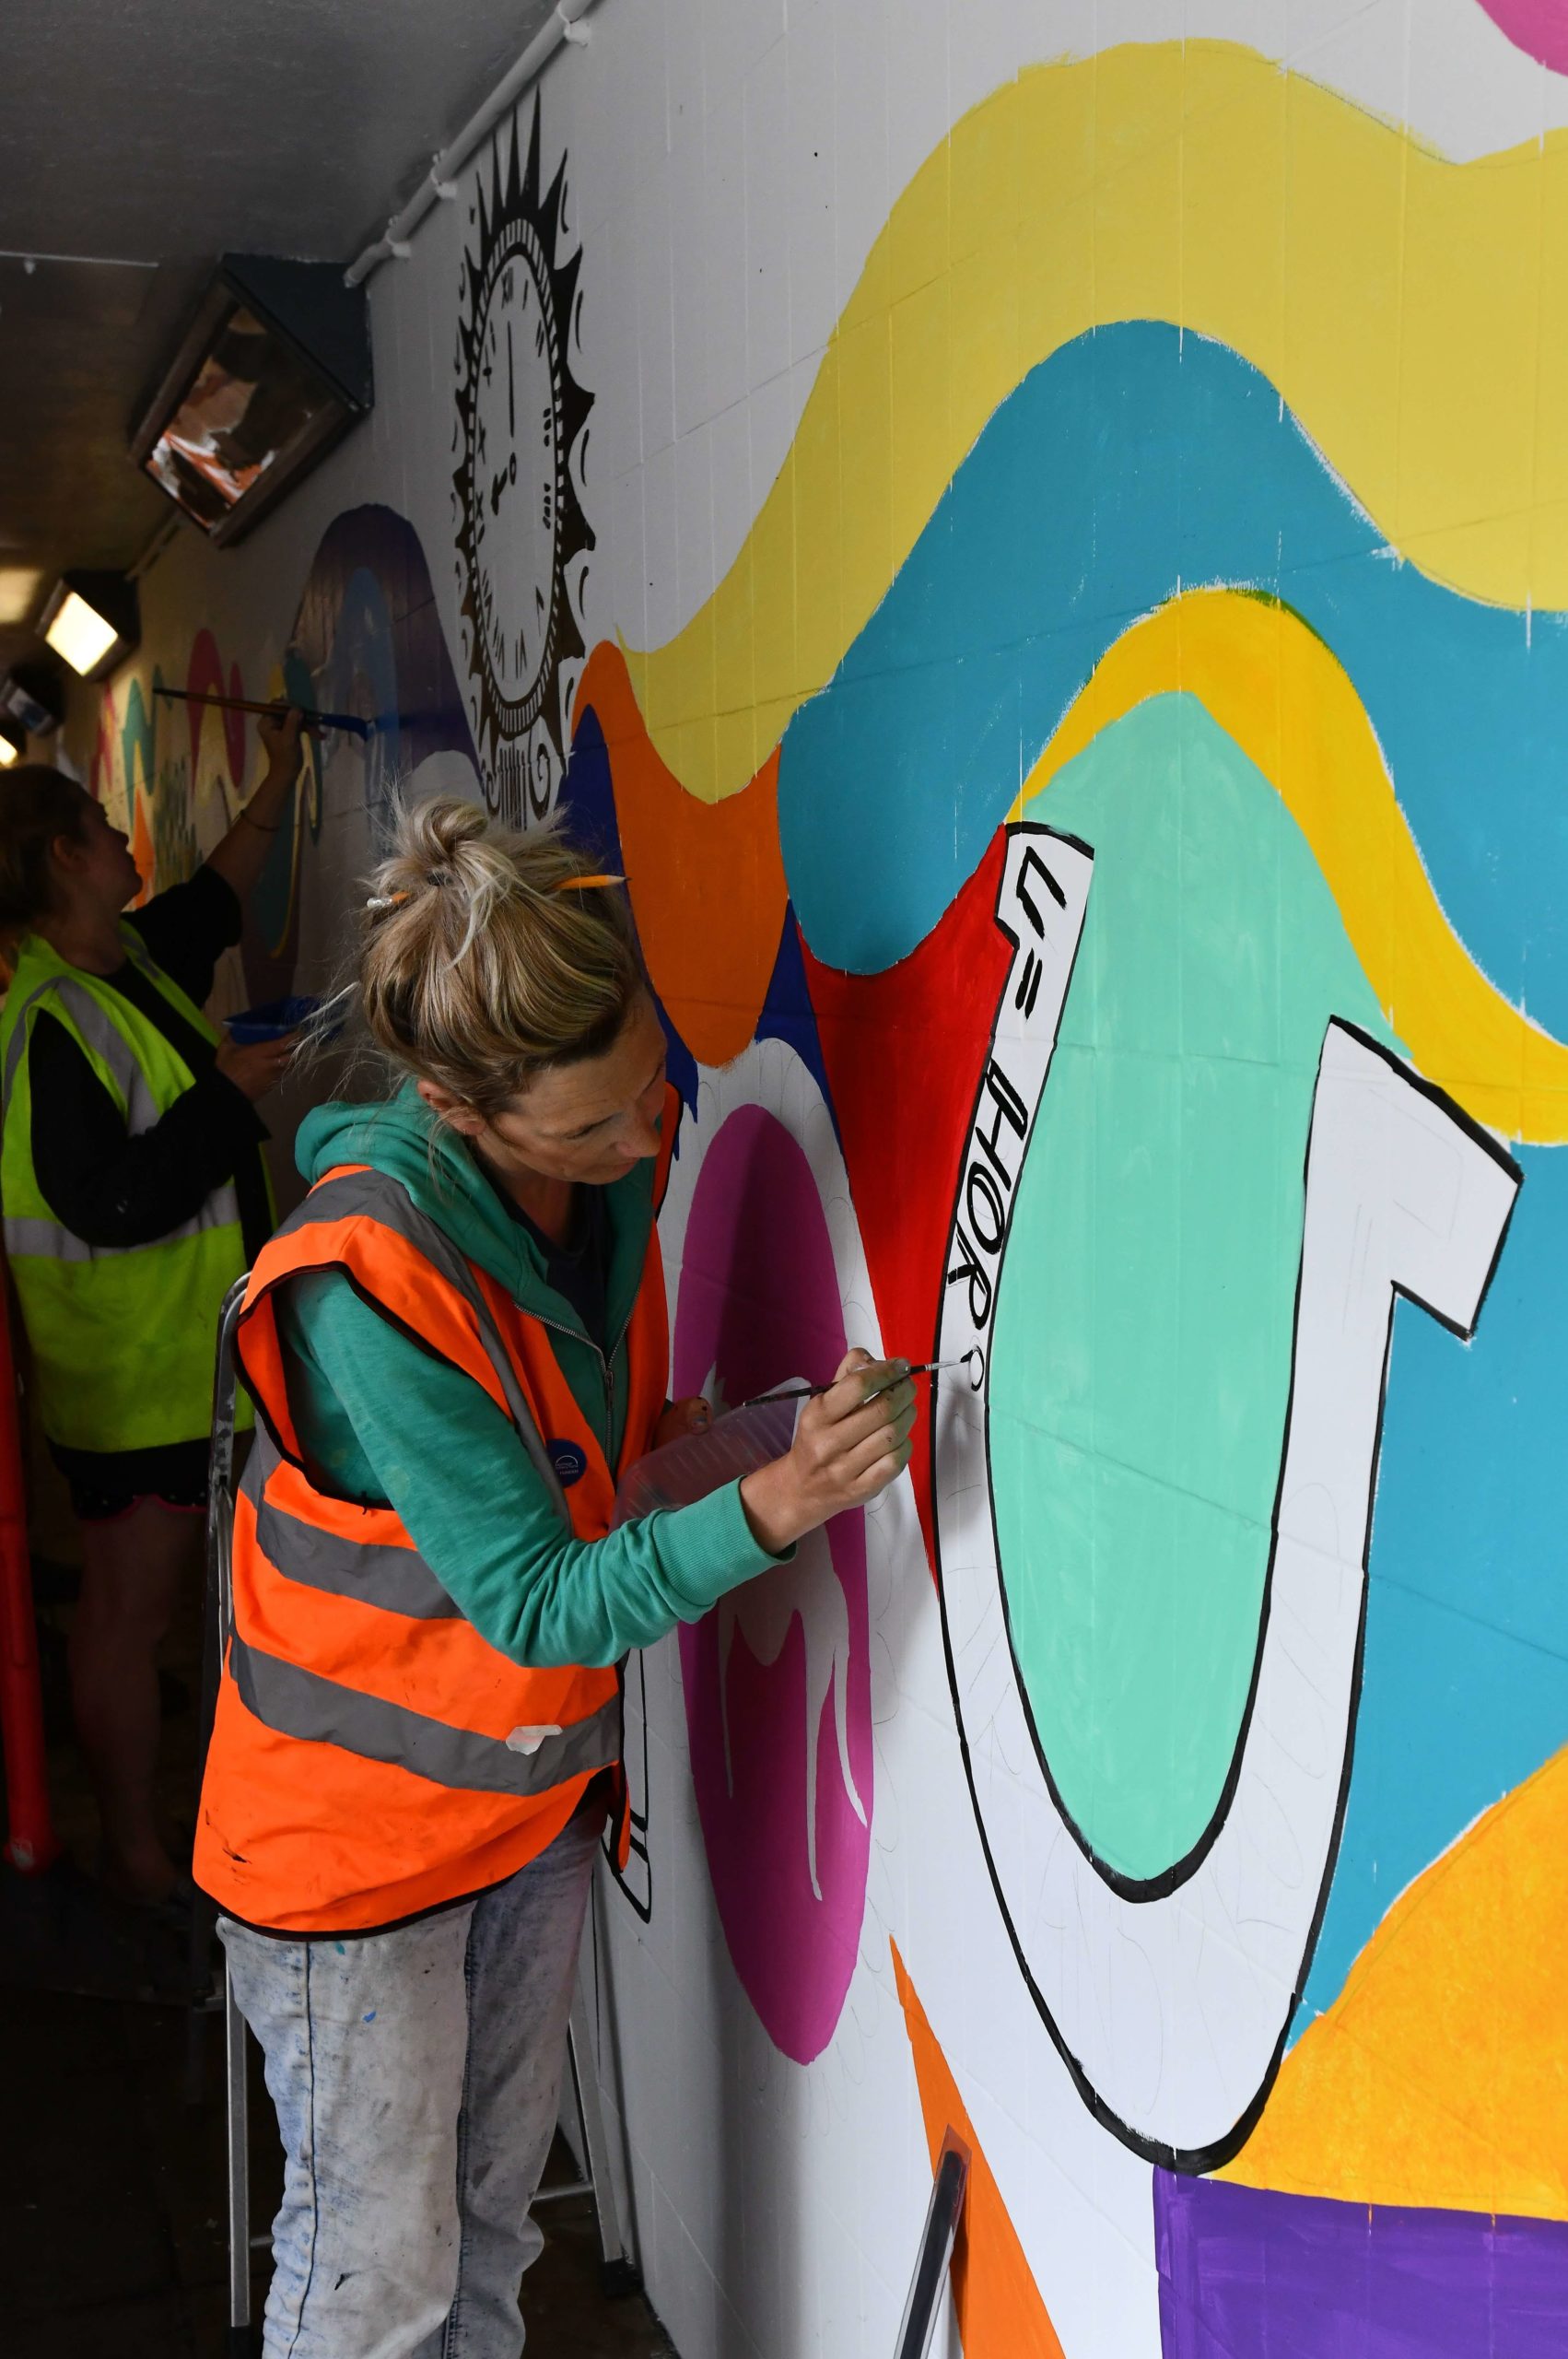 Vibrant New Mural Transforms the Horsefair Underpass